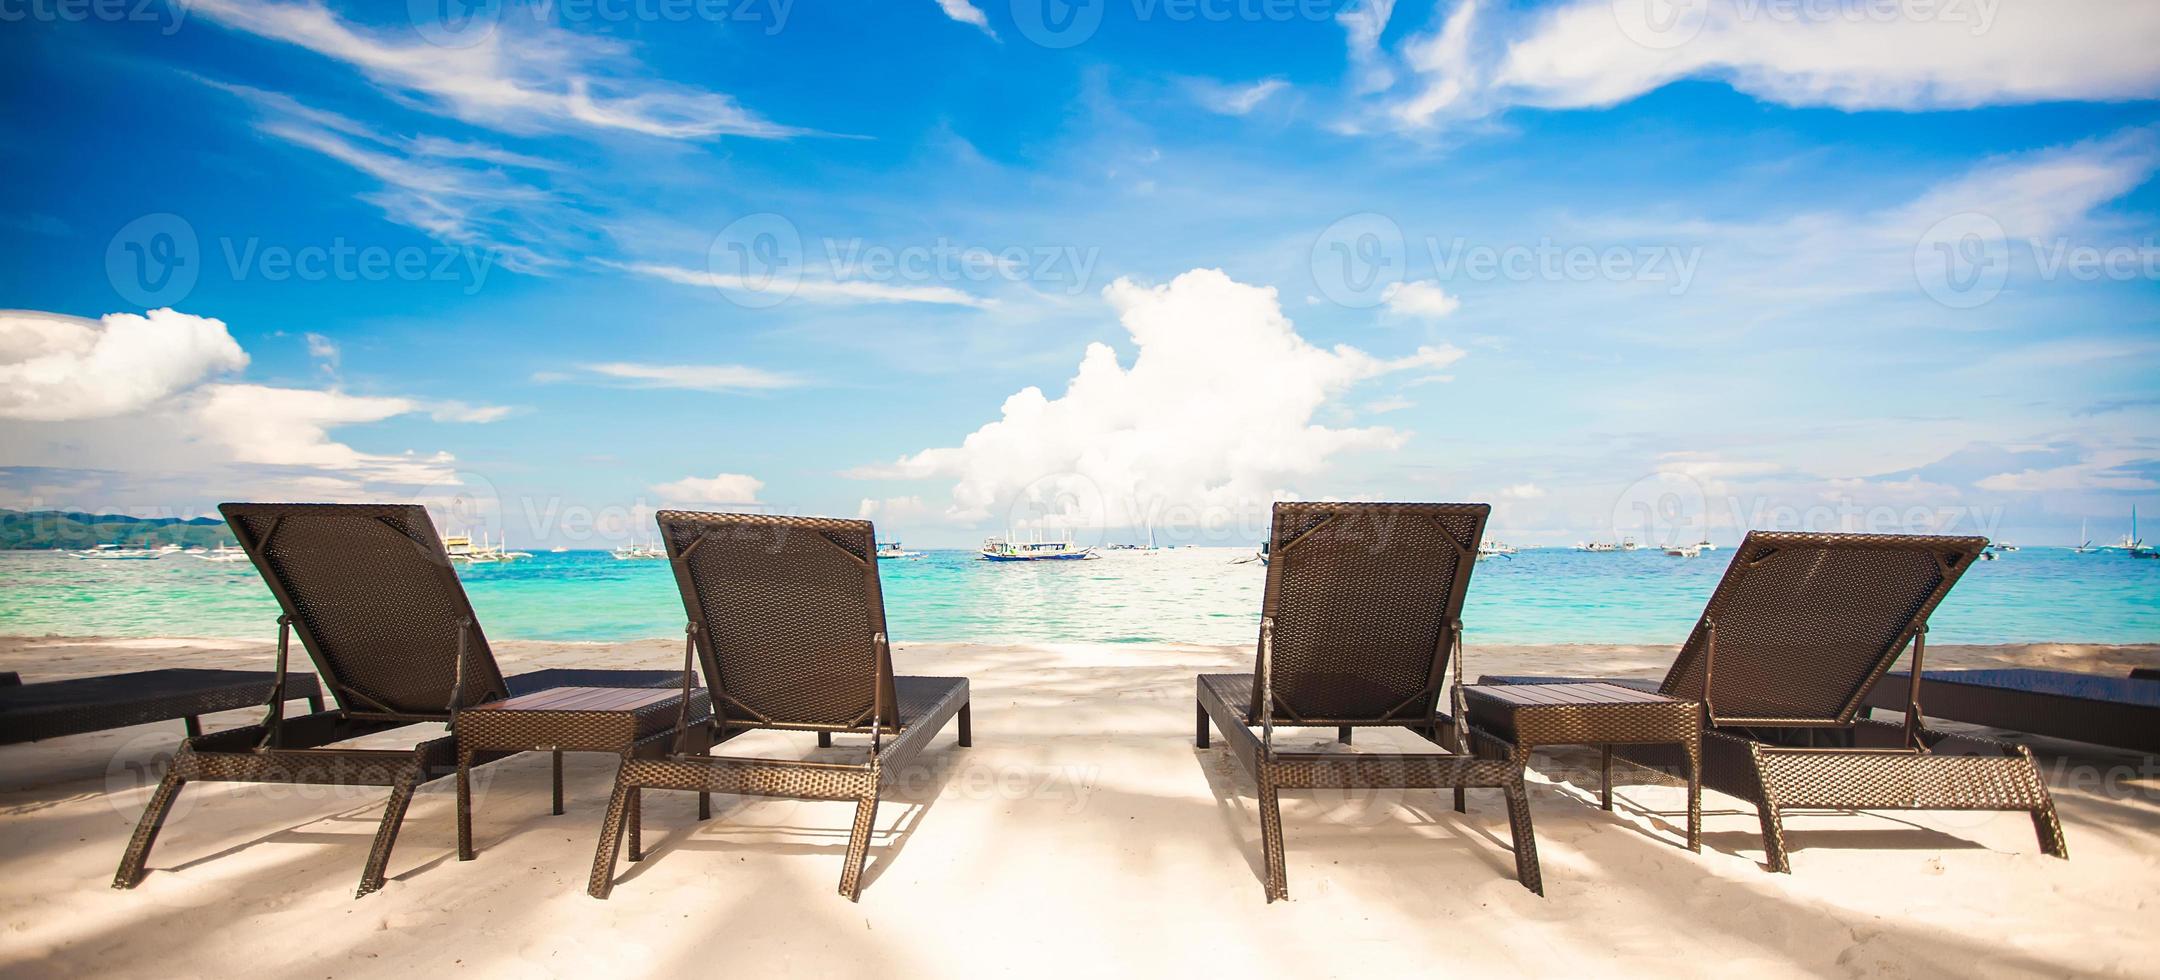 Beach chairs in exotic resort on perfect white sandy beach photo